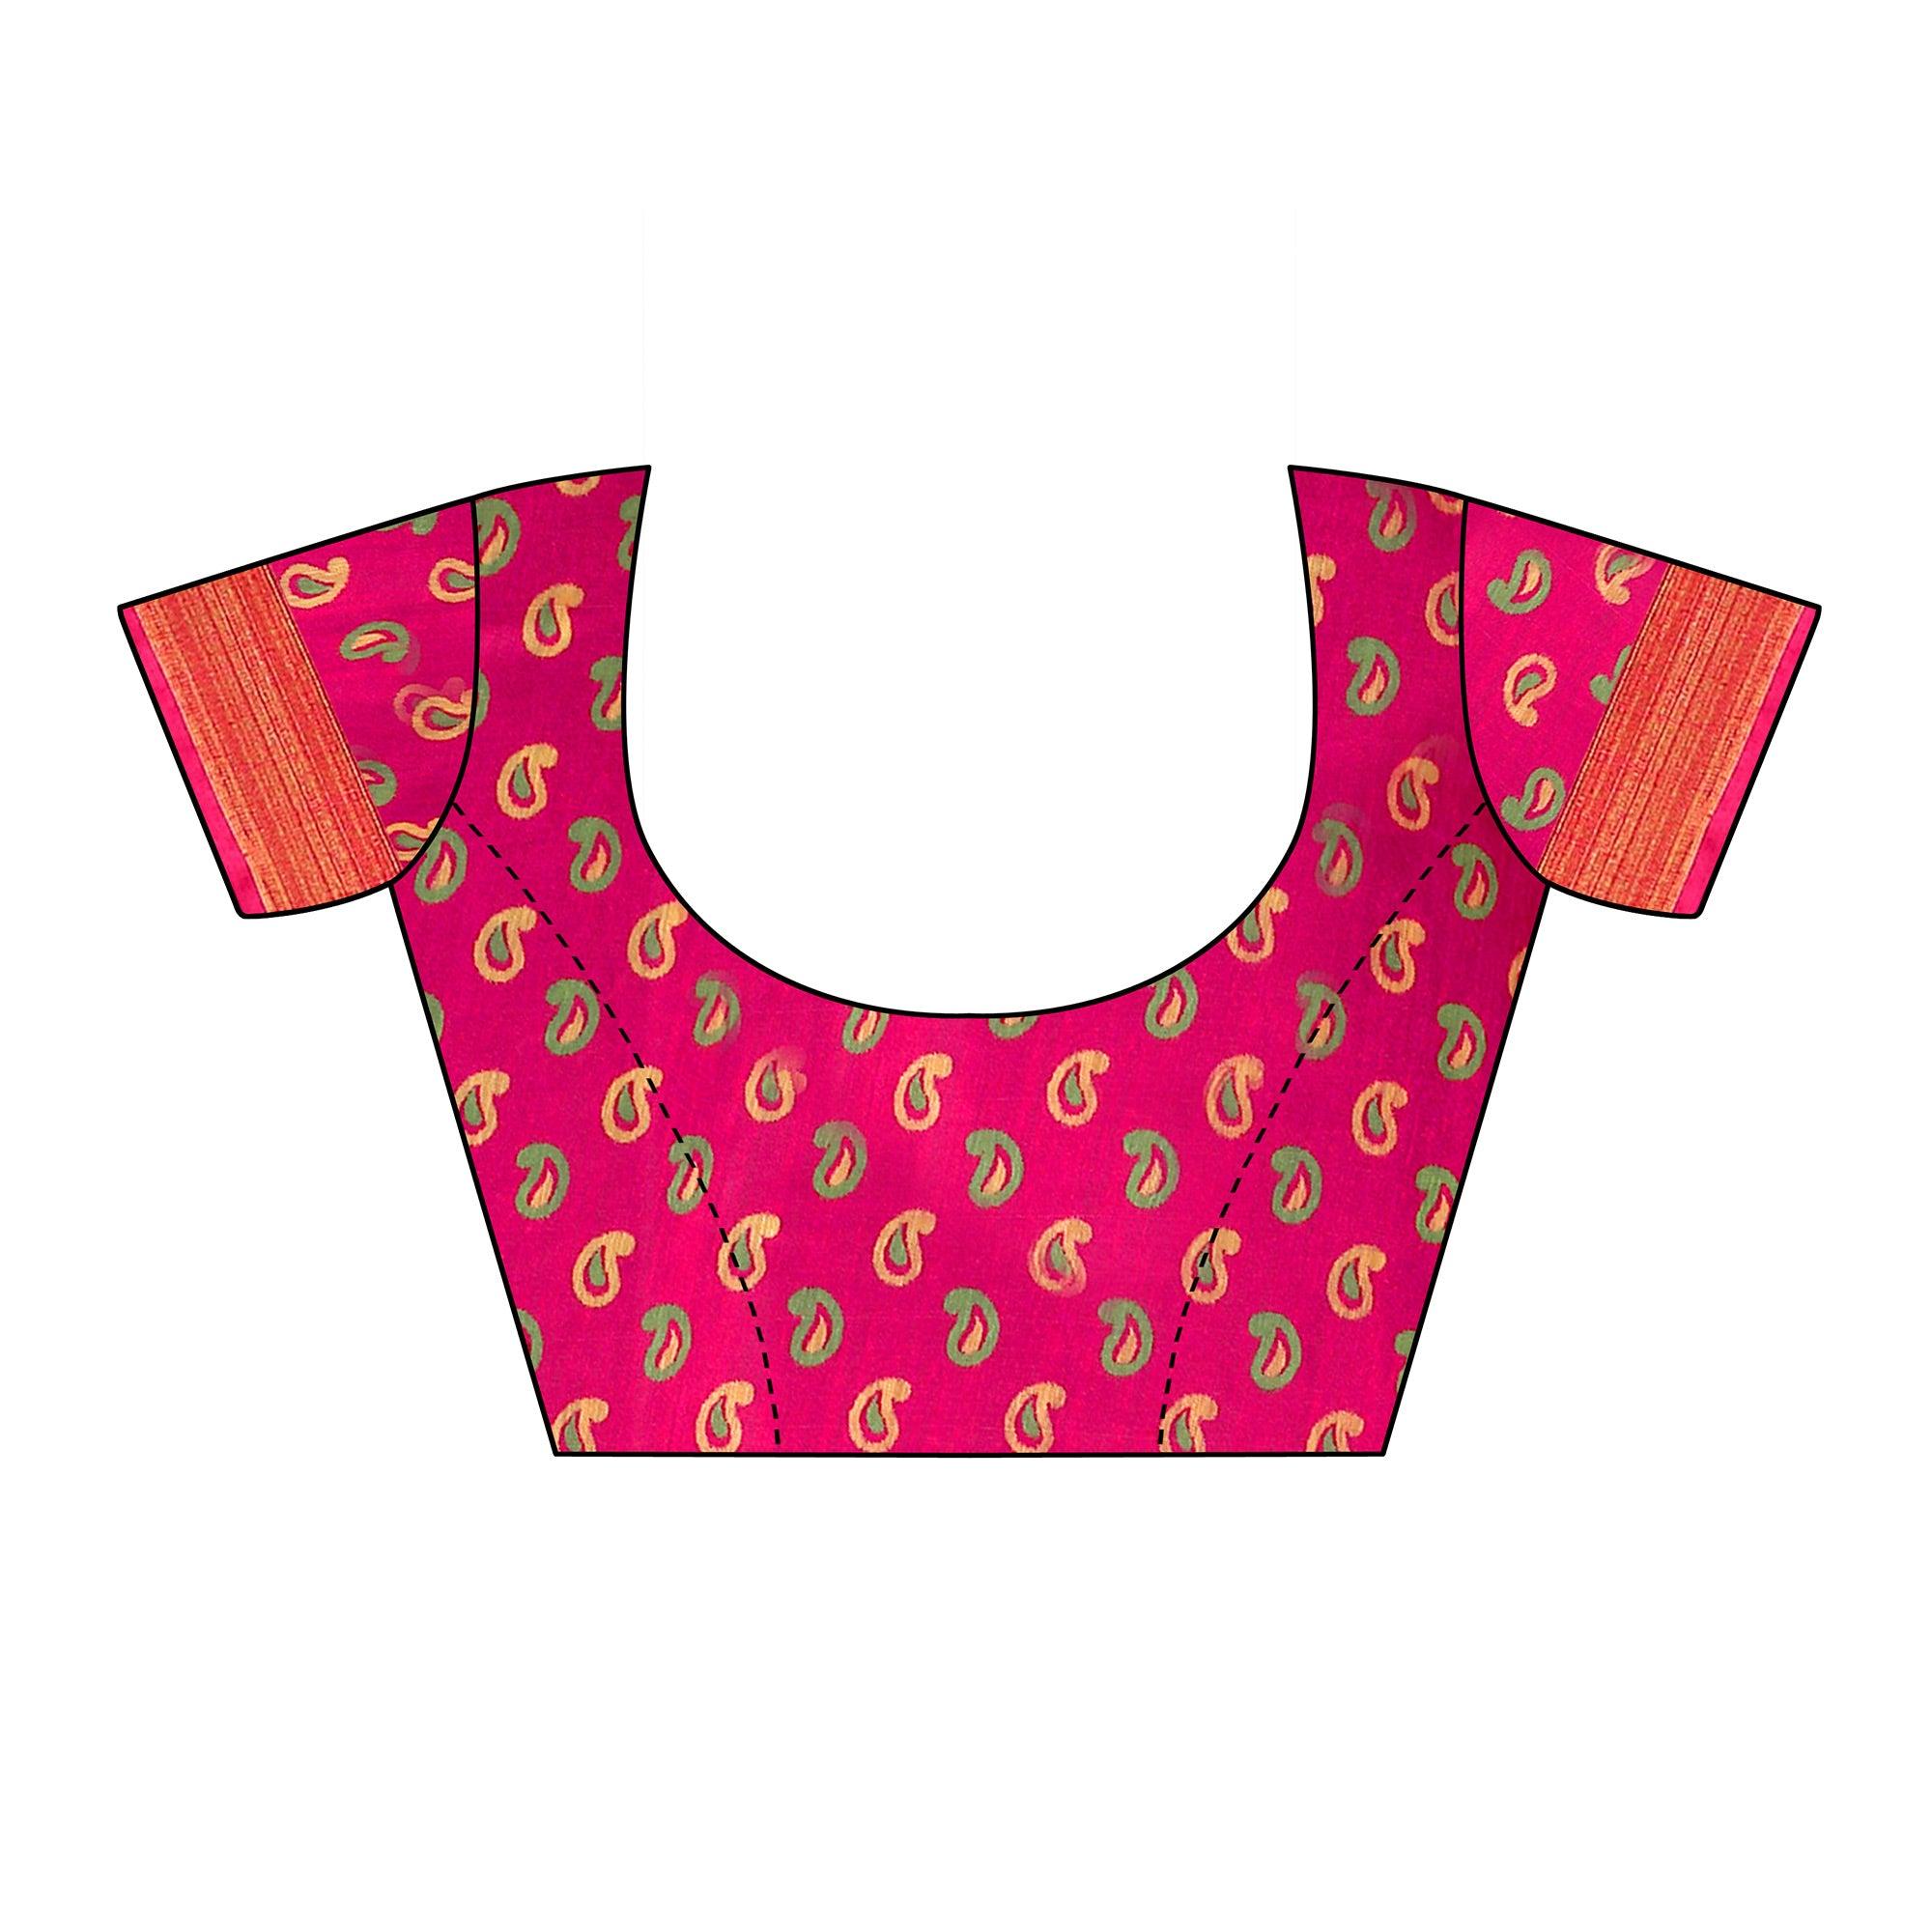 Pink Casual Wear Fancy Printed Heavy Linen Saree With Zari Border - Peachmode